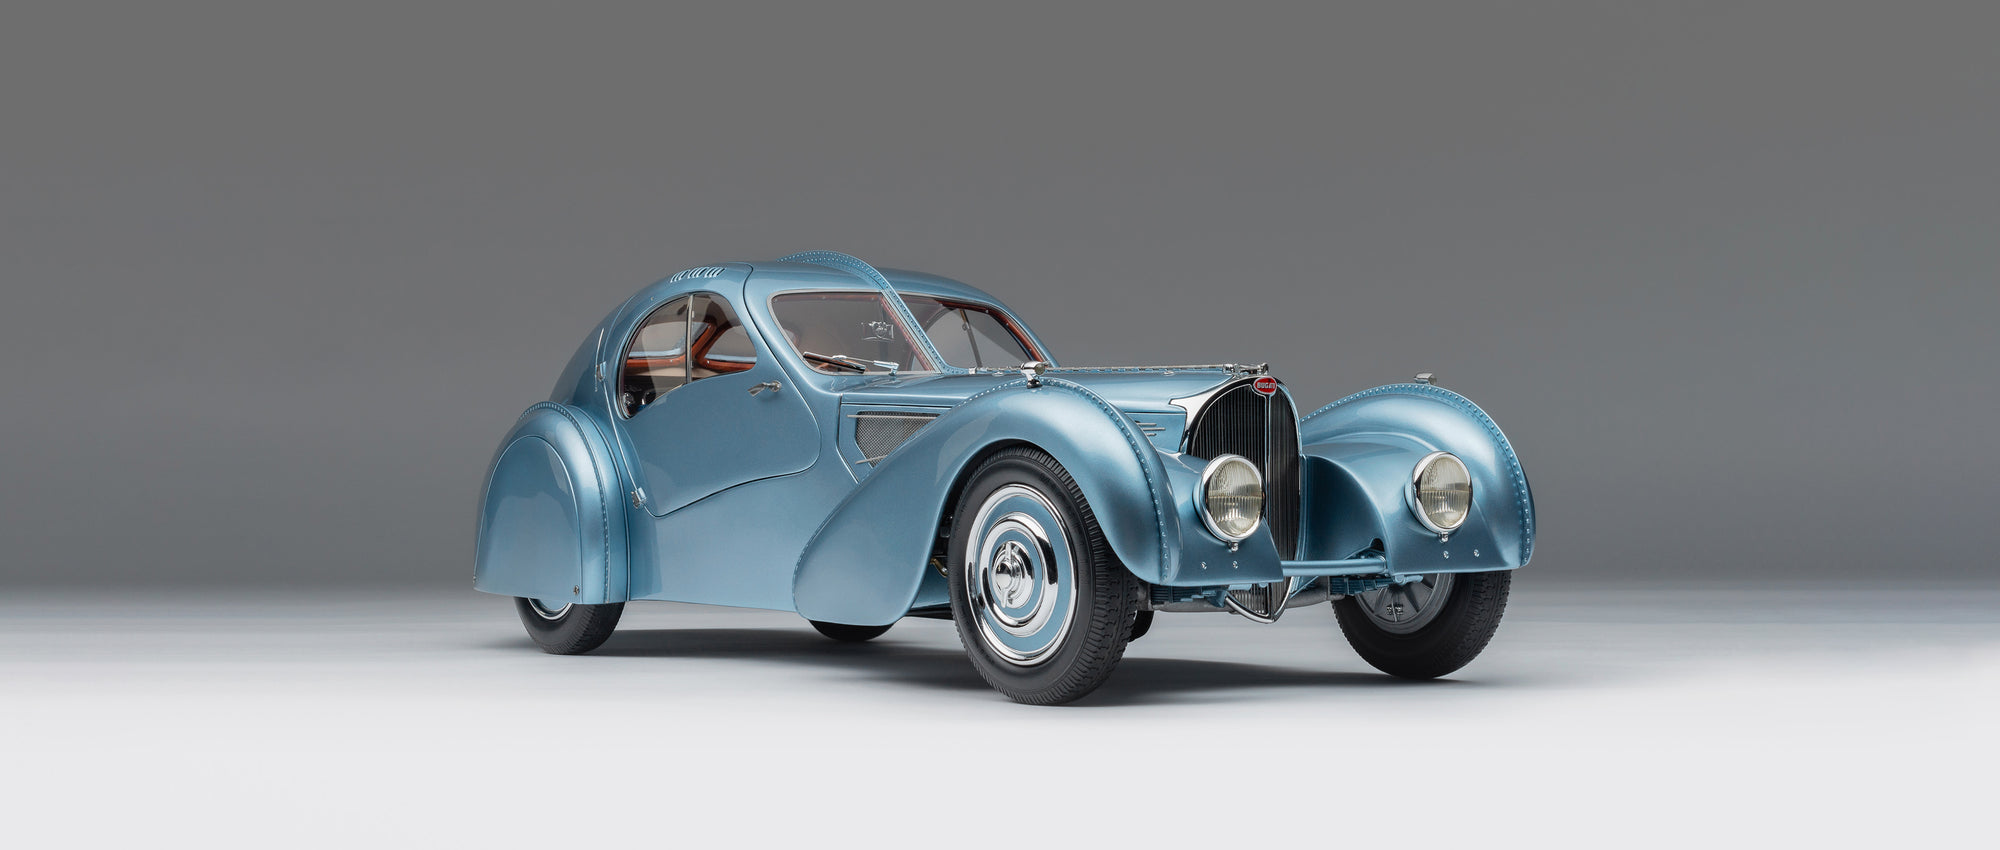 Bugatti 57SC Atlantic (1938) "The Lord Rothschild"